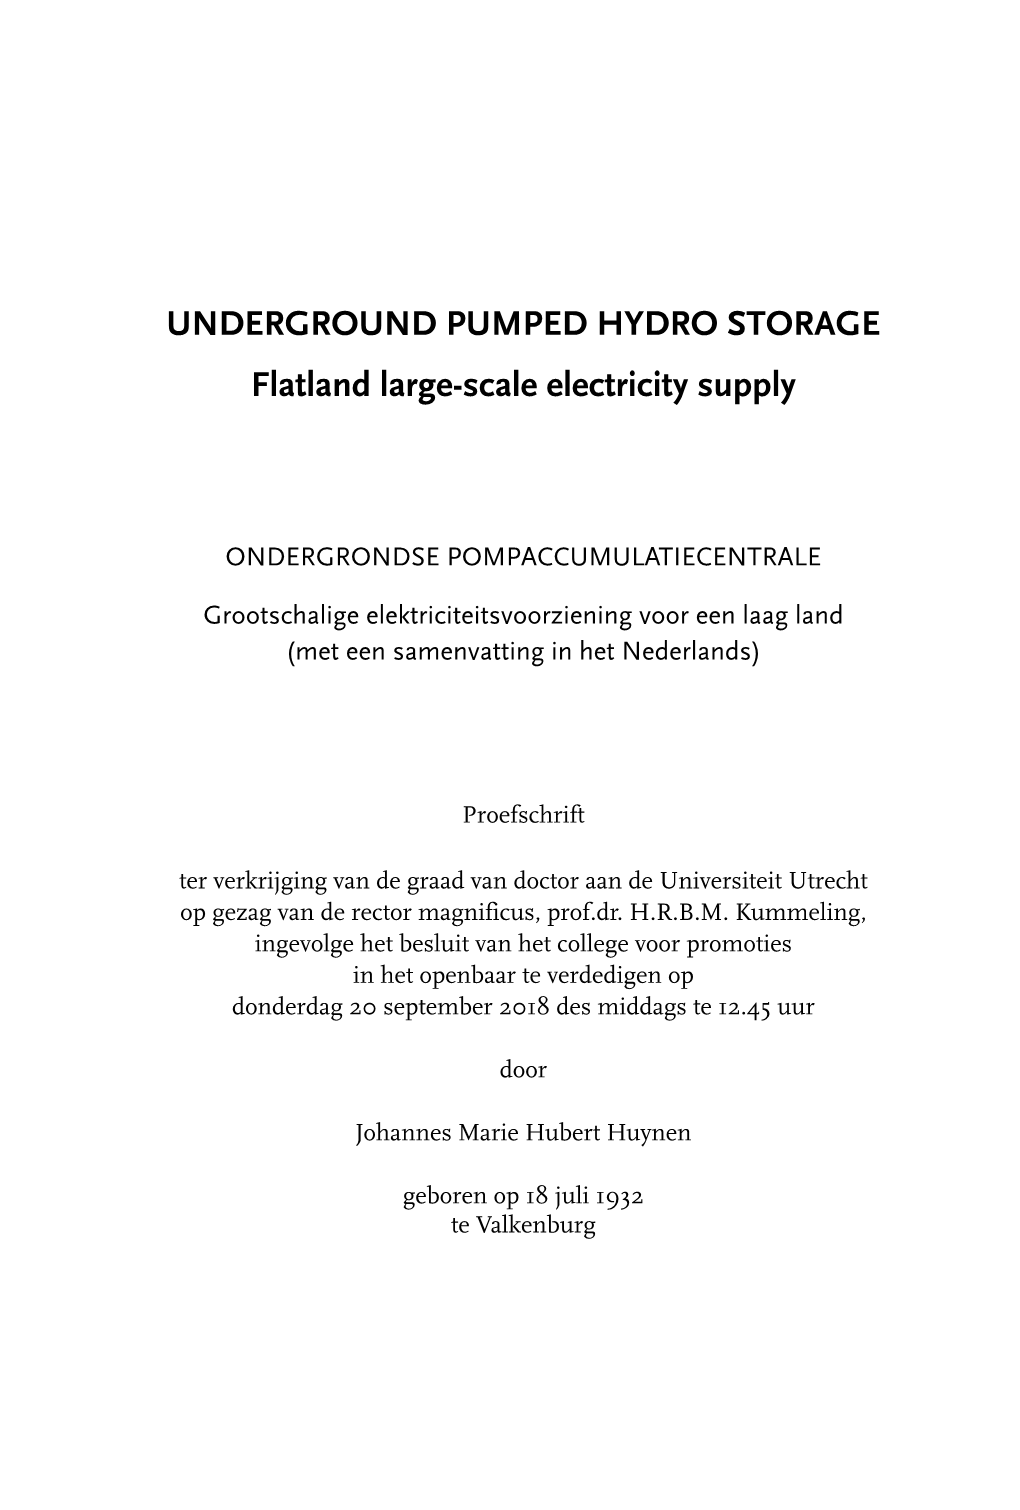 UNDERGROUND PUMPED HYDRO STORAGE Flatland Large-Scale Electricity Supply